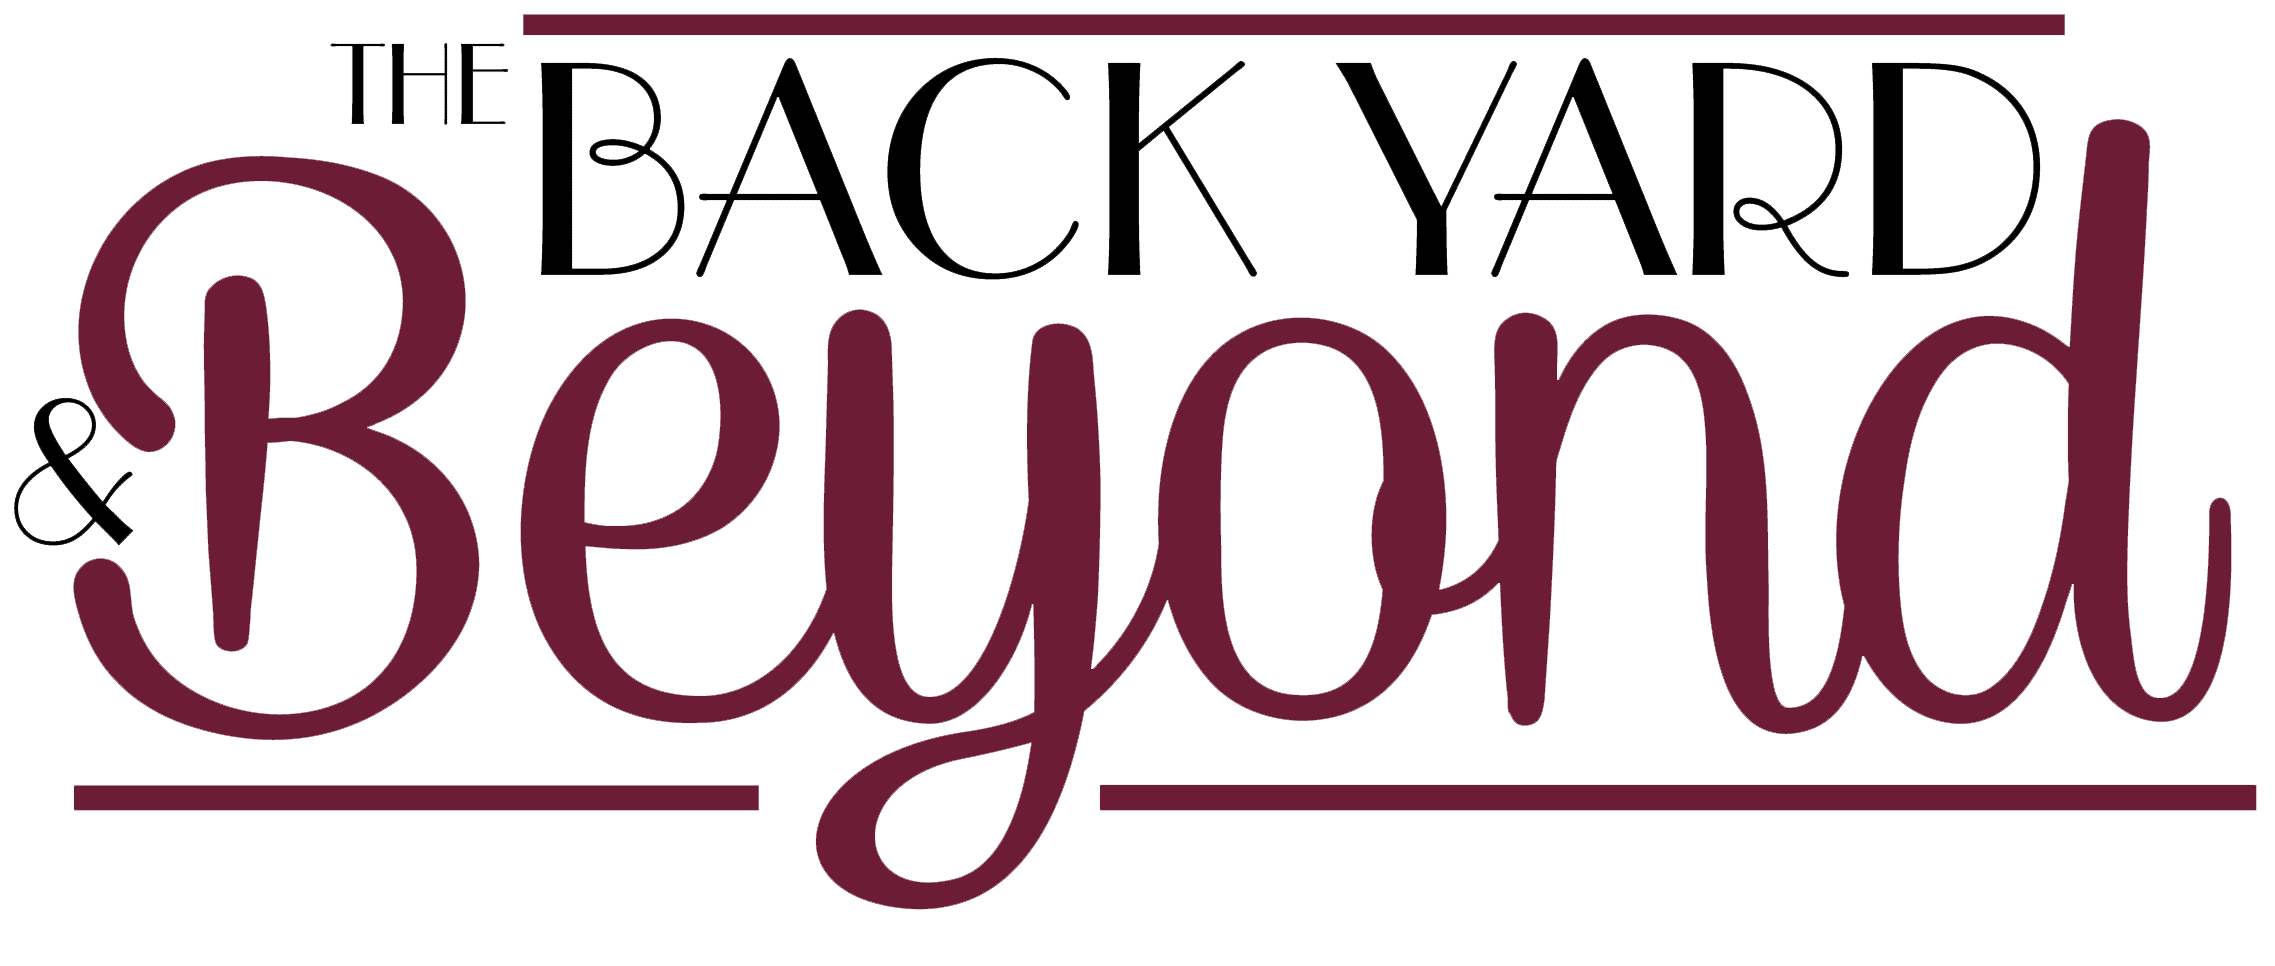 backyard beyond logo